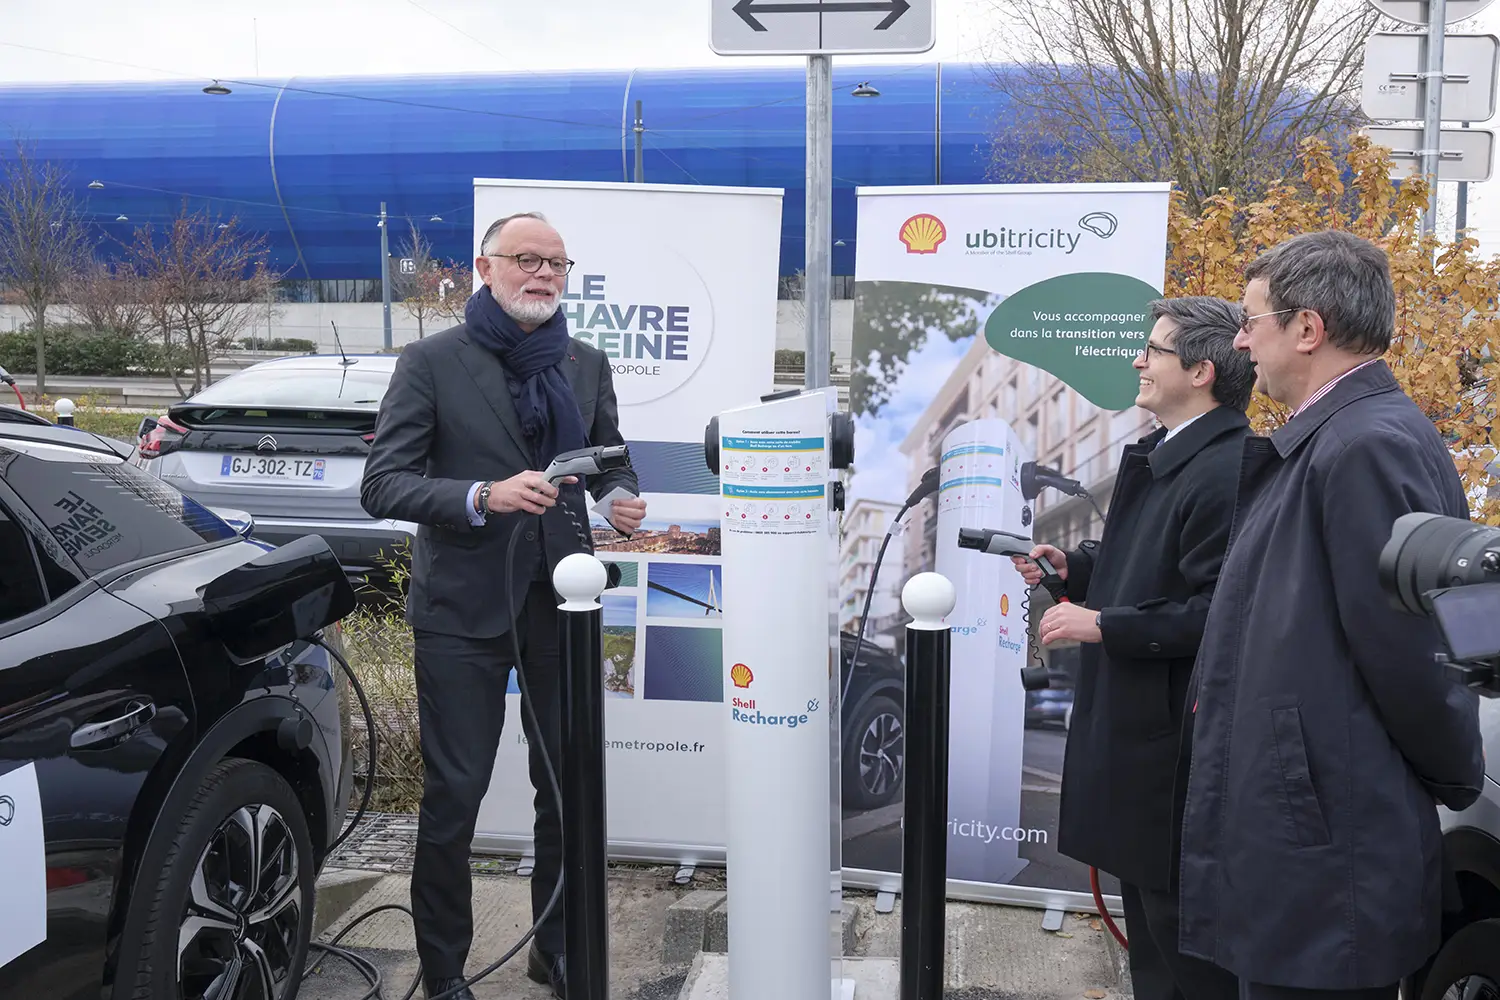 Edouard Philippe, President de la Communauté urbaine Le Havre Seine Métropole is celebrating the region's first AC rapid charger operated by ubitricity.